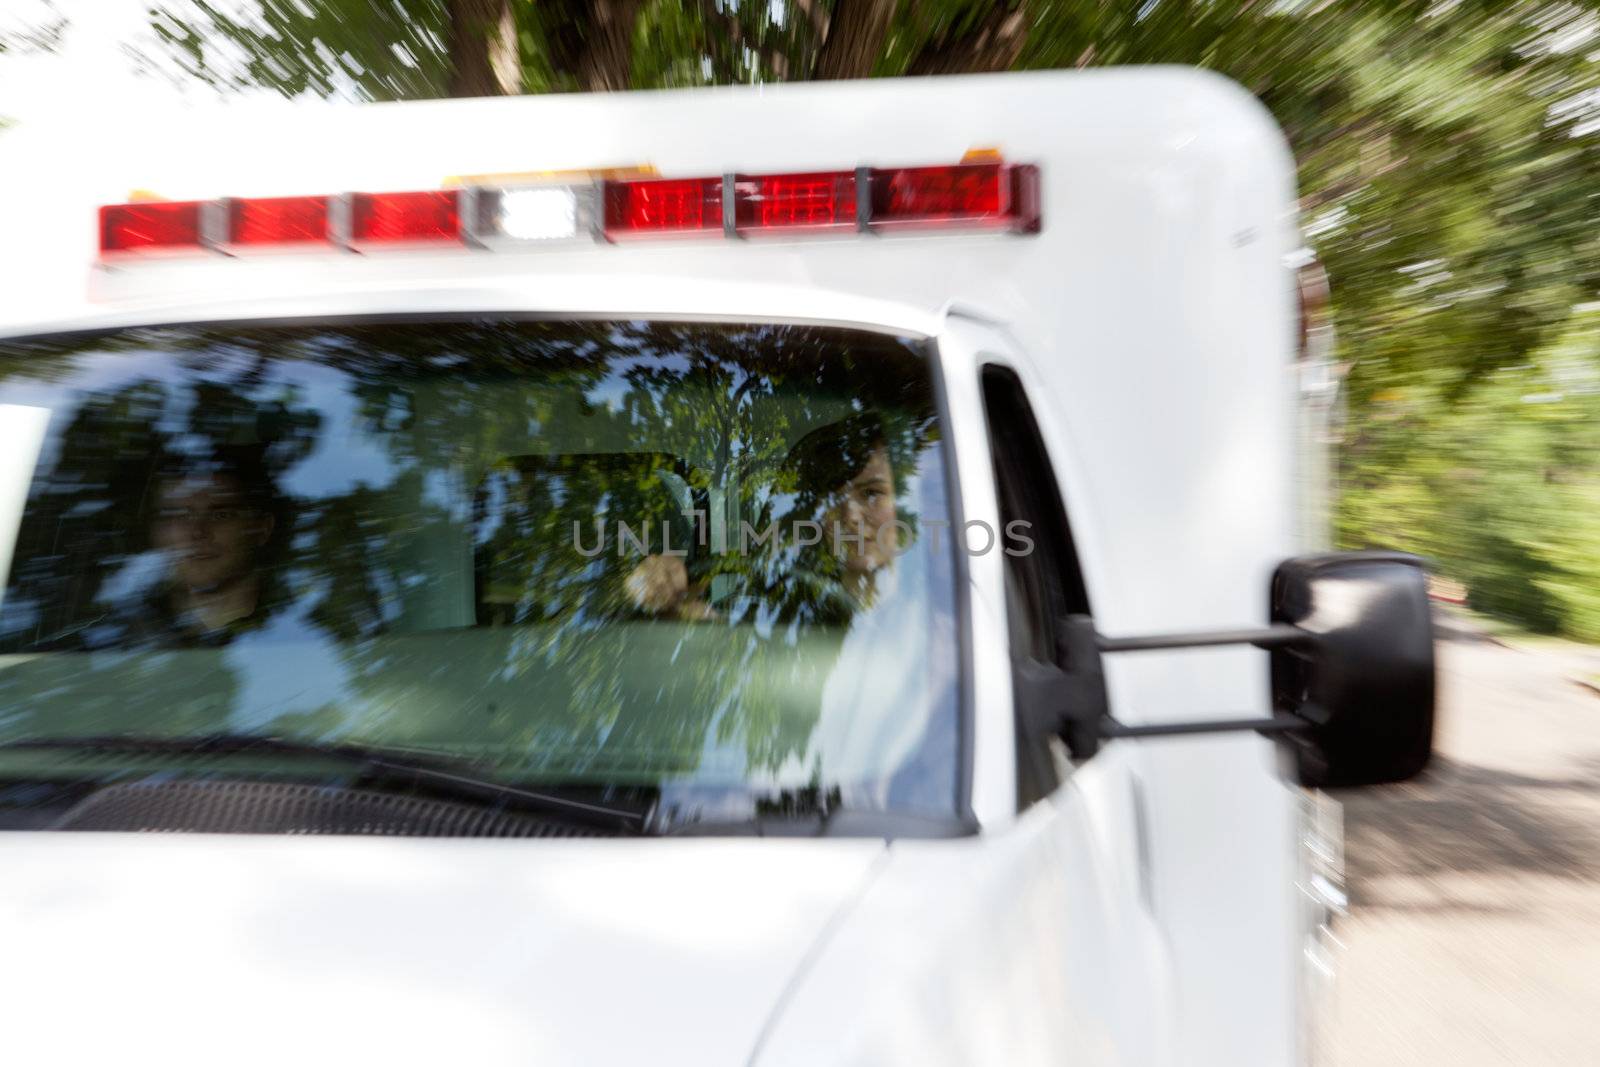 Motion blur of speeding ambulance with paramedic team